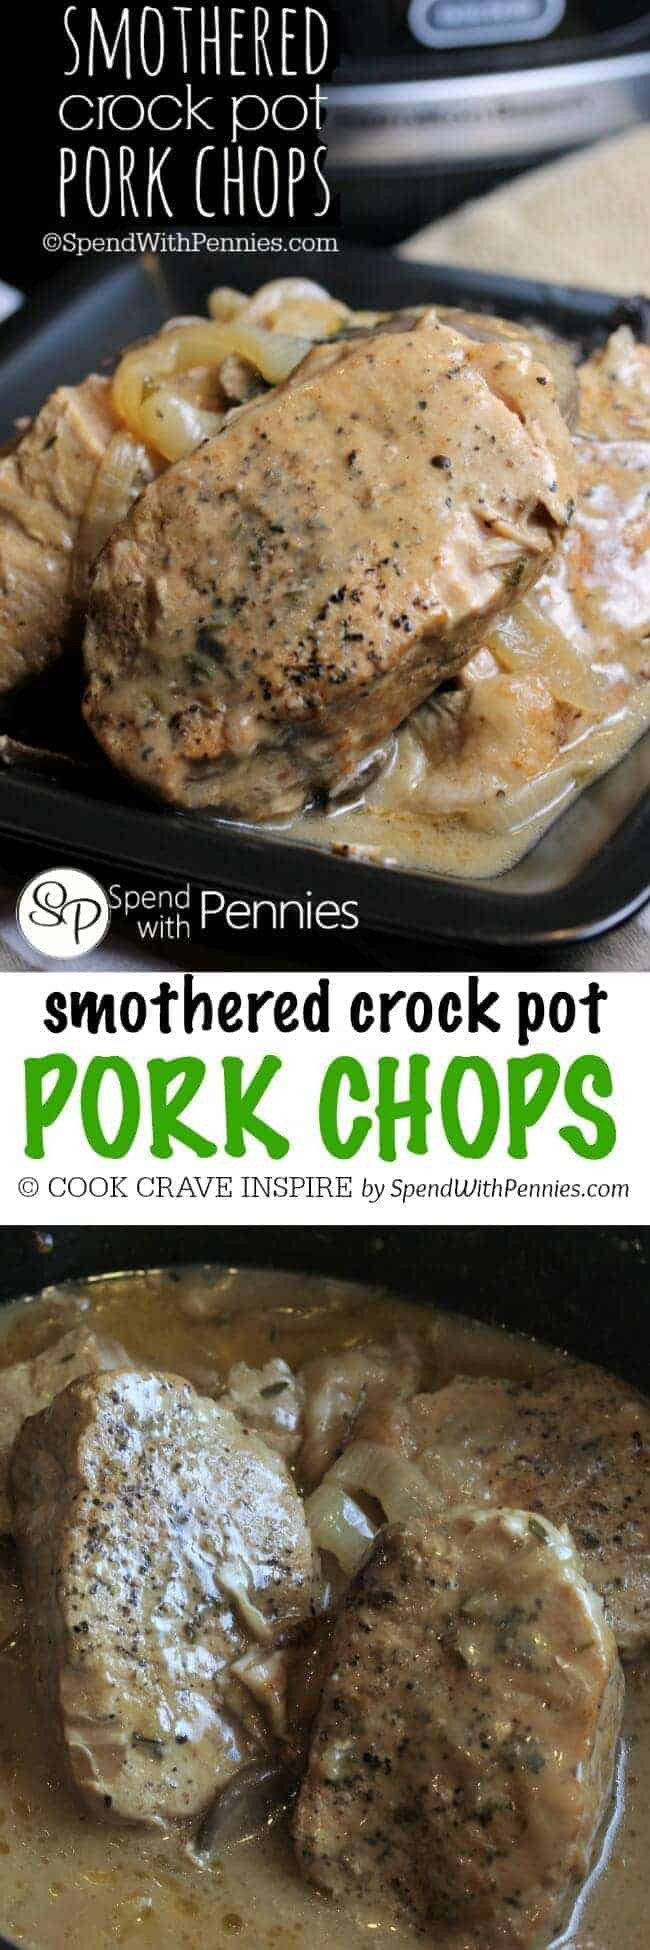 Smothered Pork Chops Crock Pot
 Smothered Crock Pot Pork Chops Spend With Pennies